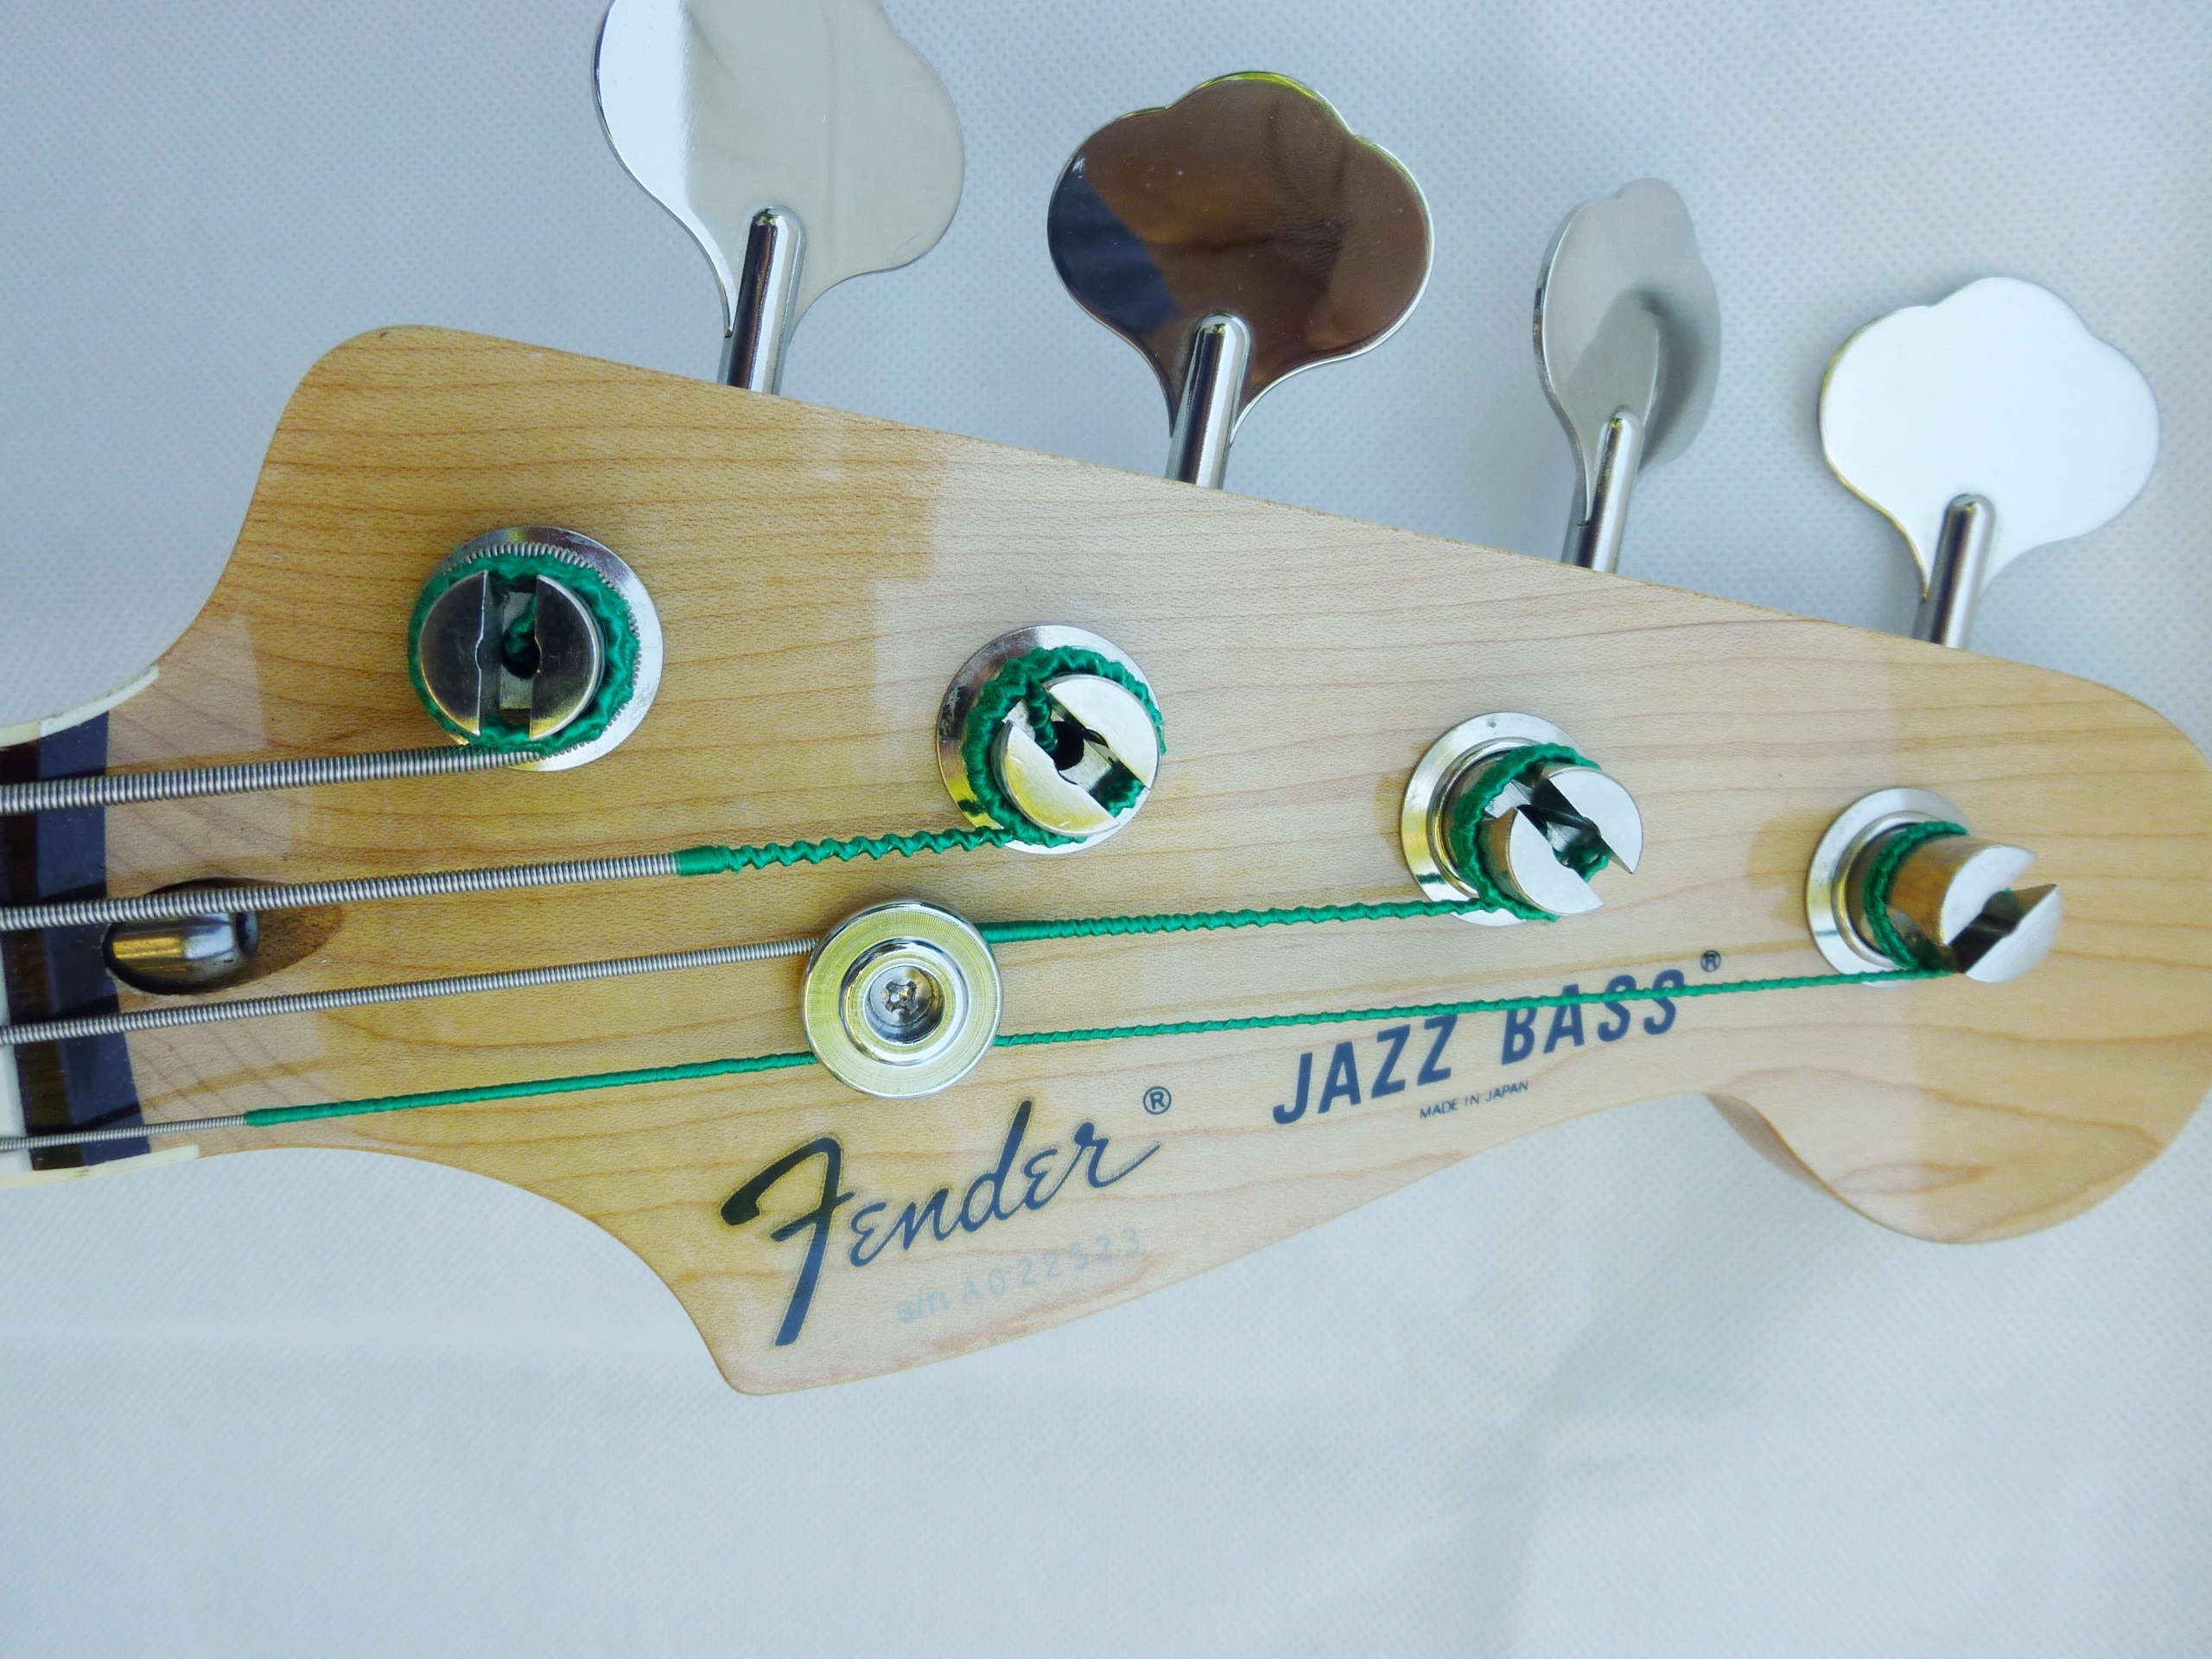 1985 Fender Jazz Bass Japan Sunburst Black Guard Rosewood Neck